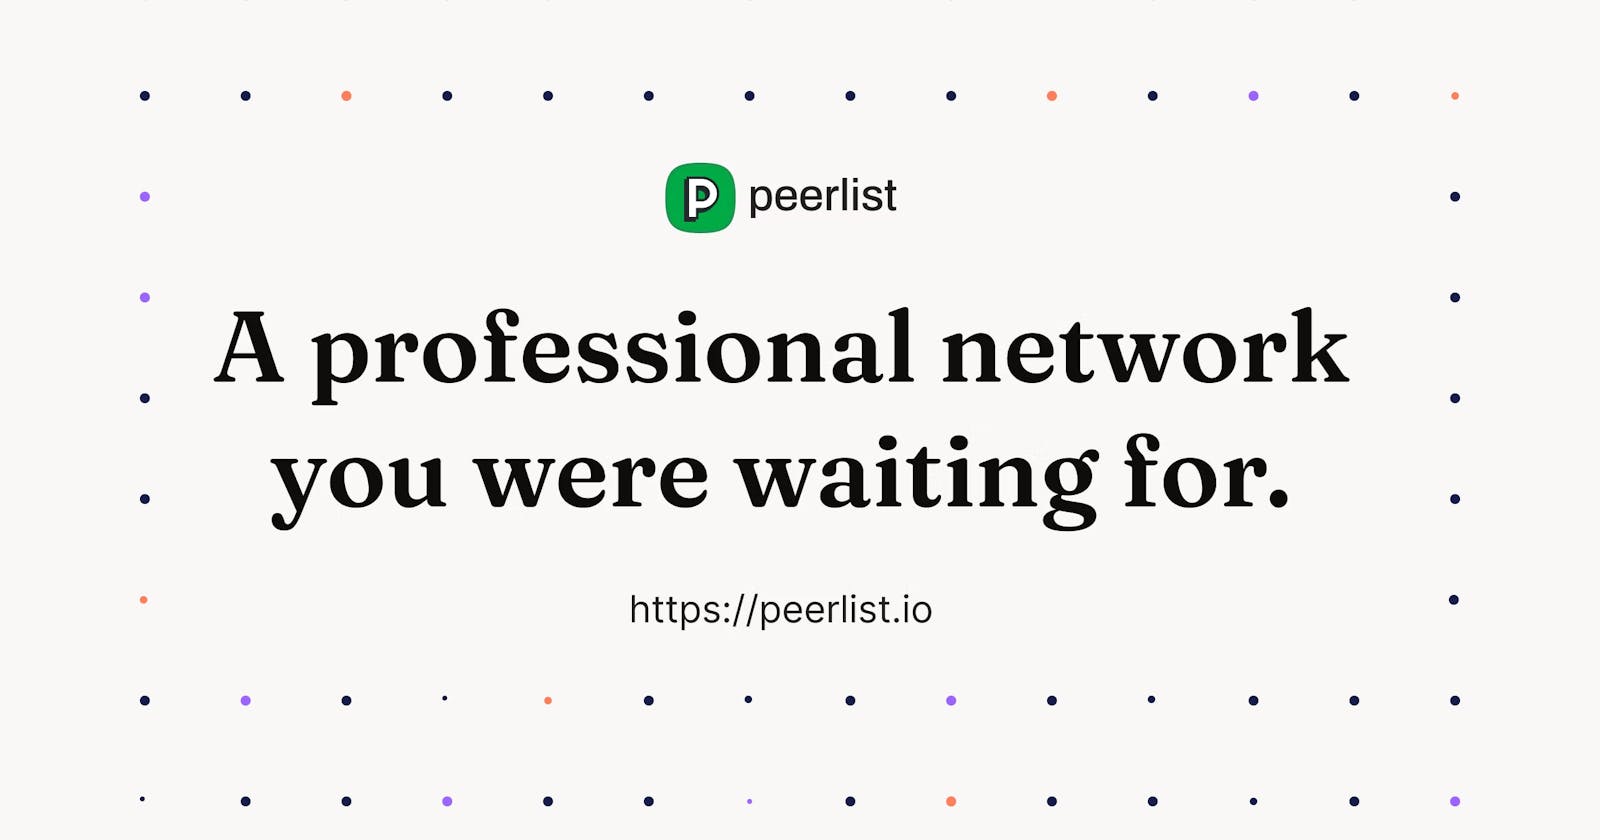 Your only Peer: Peerlist